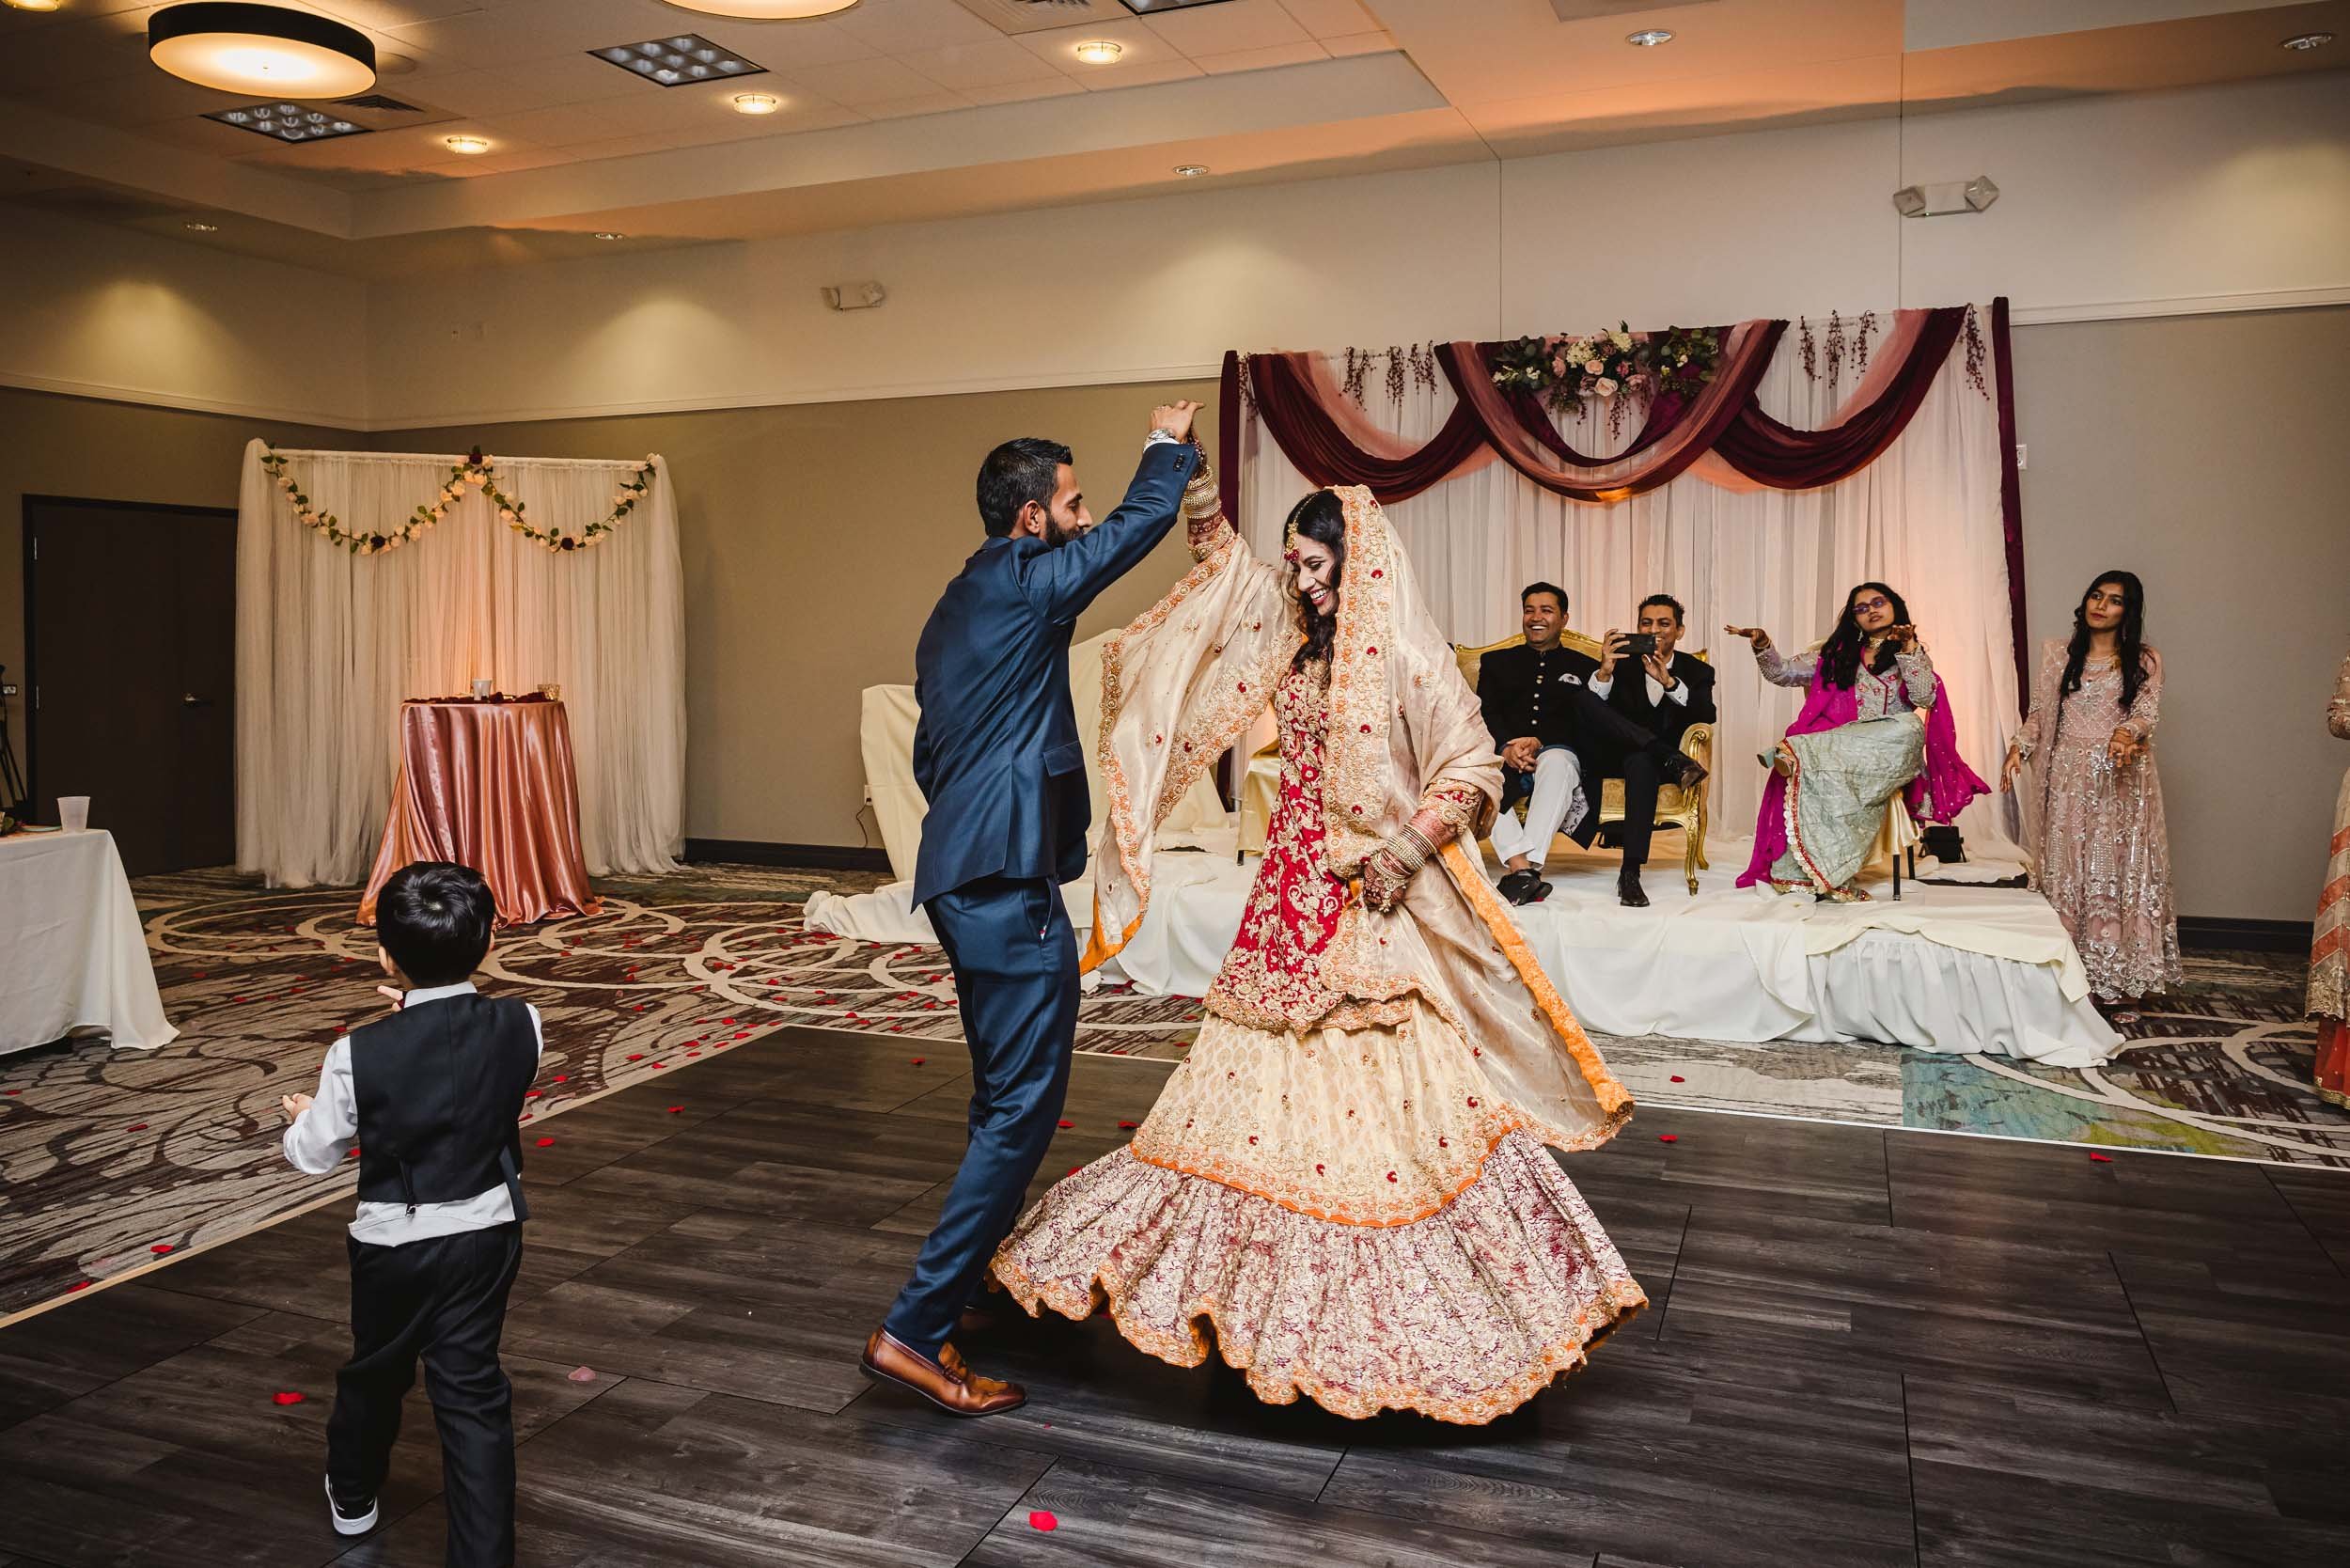 Bride and groom dance at Muslim wedding reception